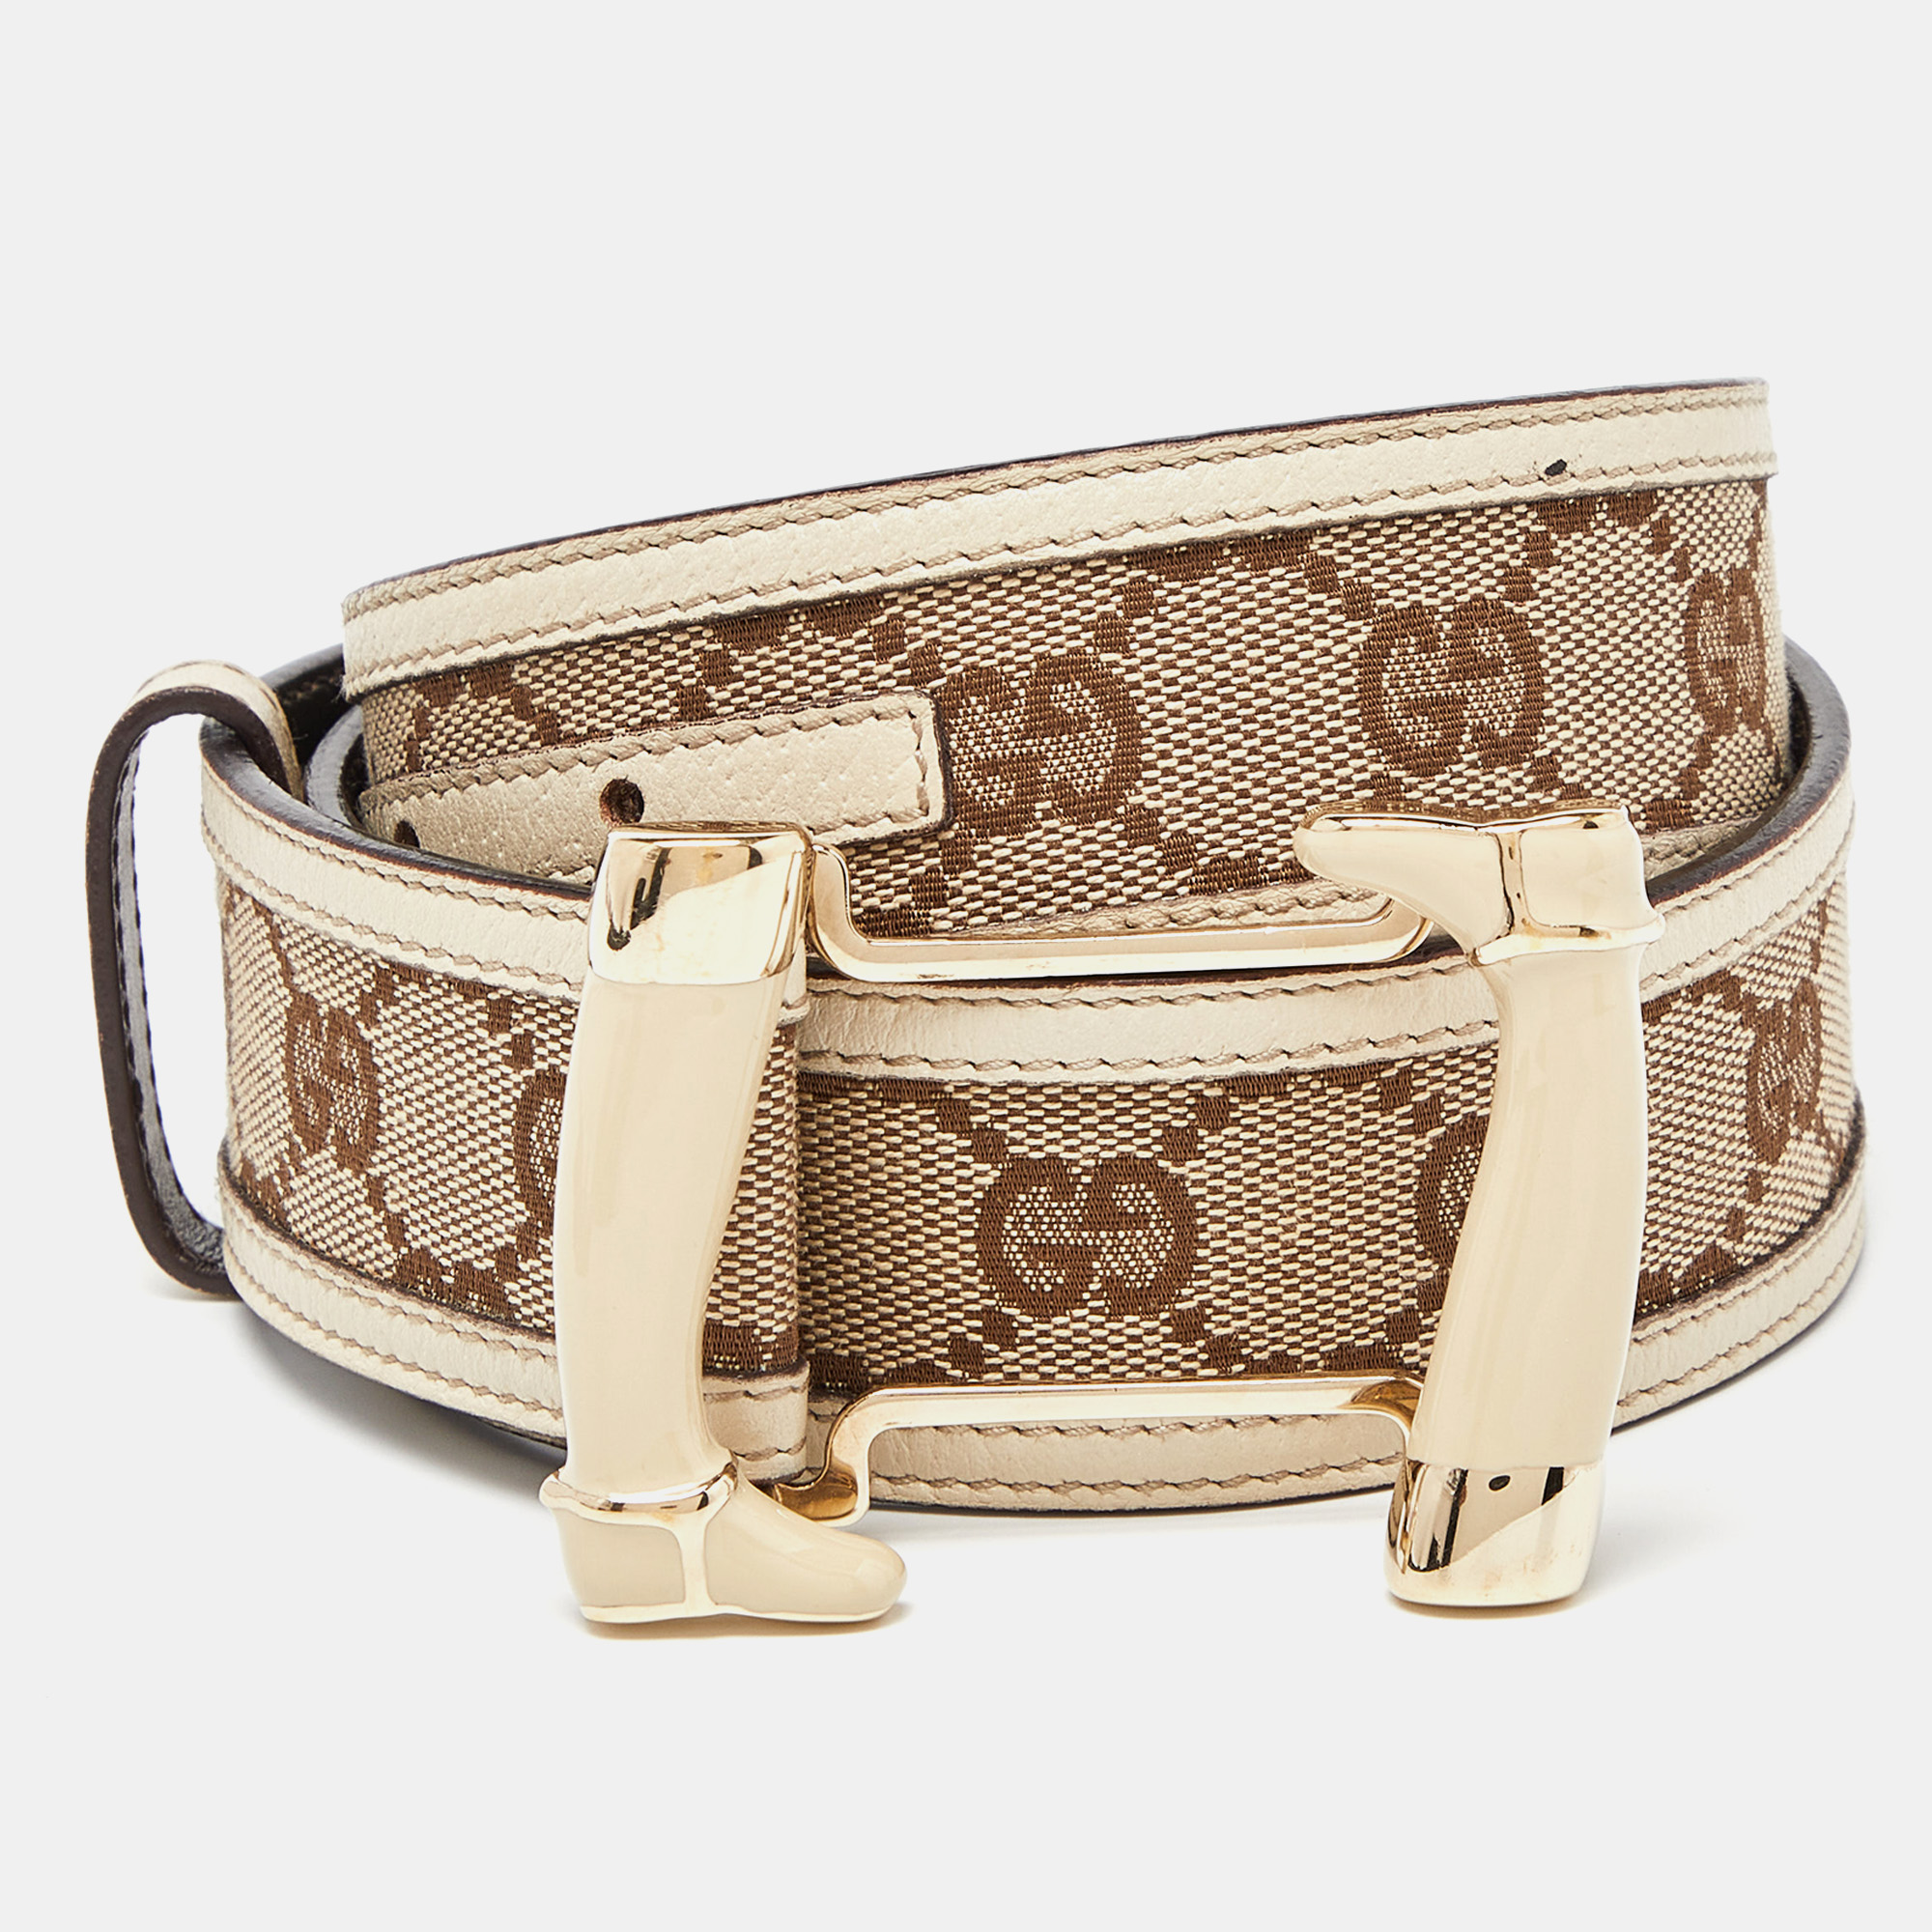 Gucci belt women's belt size: 2cm, 3cm.3.4cm.4cm : r/Luxuryreplca